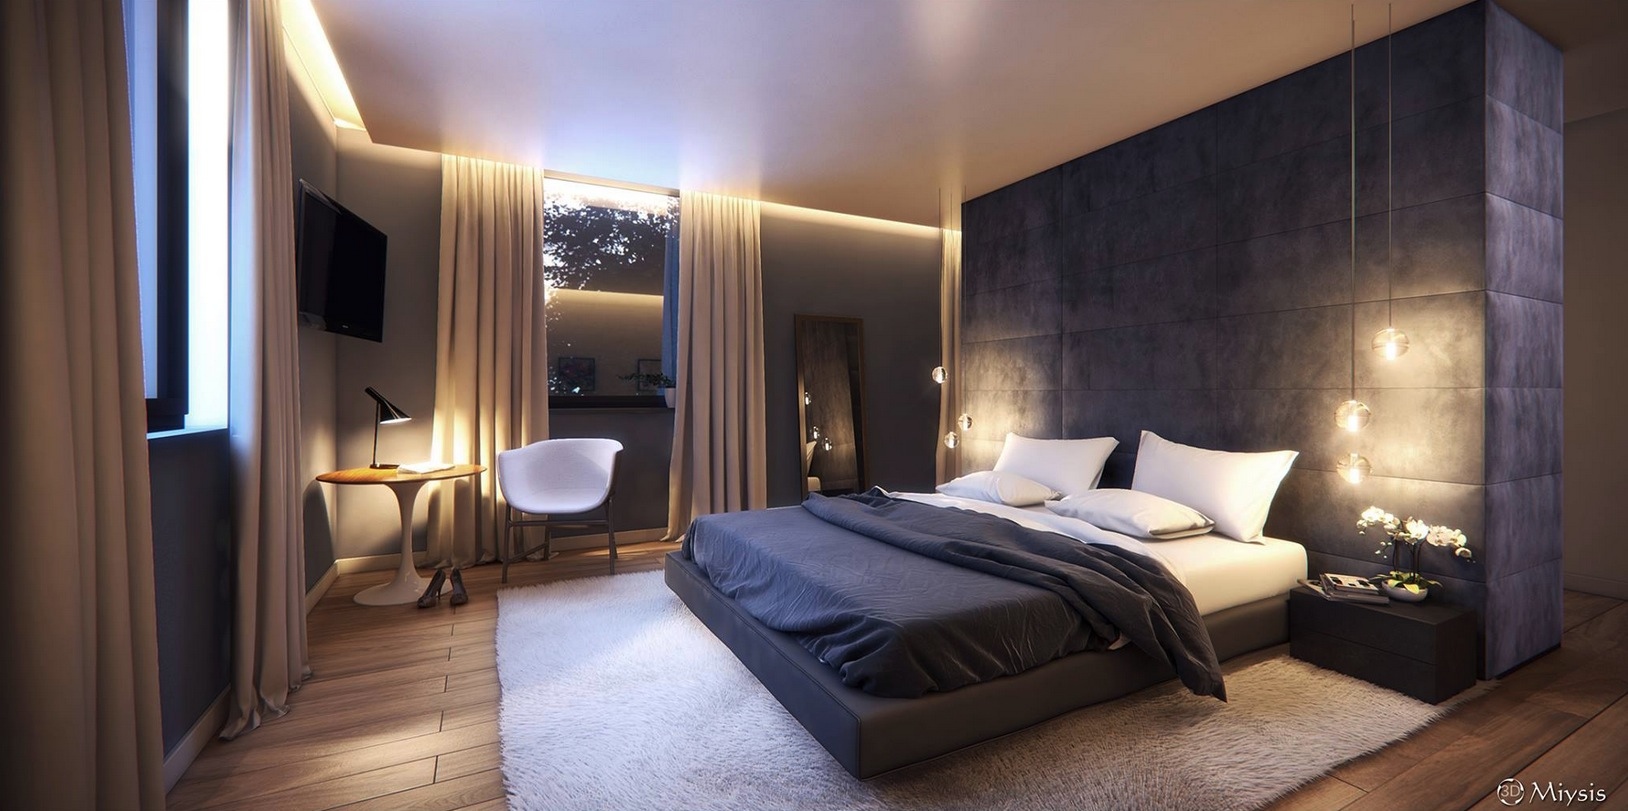 modern minimalist bedroom design "width =" 1628 "height =" 811 "srcset =" https://mileray.com/wp-content/uploads/2020/05/1588507754_156_10-Top-Of-Minimalist-Bedroom-Ideas-Combined-With-Modern-and.jpeg 1628w, https://mileray.com/wp - content / uploads / 2016/10 / Miysis-300x149.jpeg 300w, https://mileray.com/wp-content/uploads/2016/10/Miysis-768x383.jpeg 768w, https://mileray.com/wp - content / uploads / 2016/10 / Miysis-1024x510.jpeg 1024w, https://mileray.com/wp-content/uploads/2016/10/Miysis-324x160.jpeg 324w, https://mileray.com/wp - content / uploads / 2016/10 / Miysis-696x347.jpeg 696w, https://mileray.com/wp-content/uploads/2016/10/Miysis-1068x532.jpeg 1068w, https://mileray.com/wp - content / uploads / 2016/10 / Miysis-843x420.jpeg 843w "sizes =" (maximum width: 1628px) 100vw, 1628px